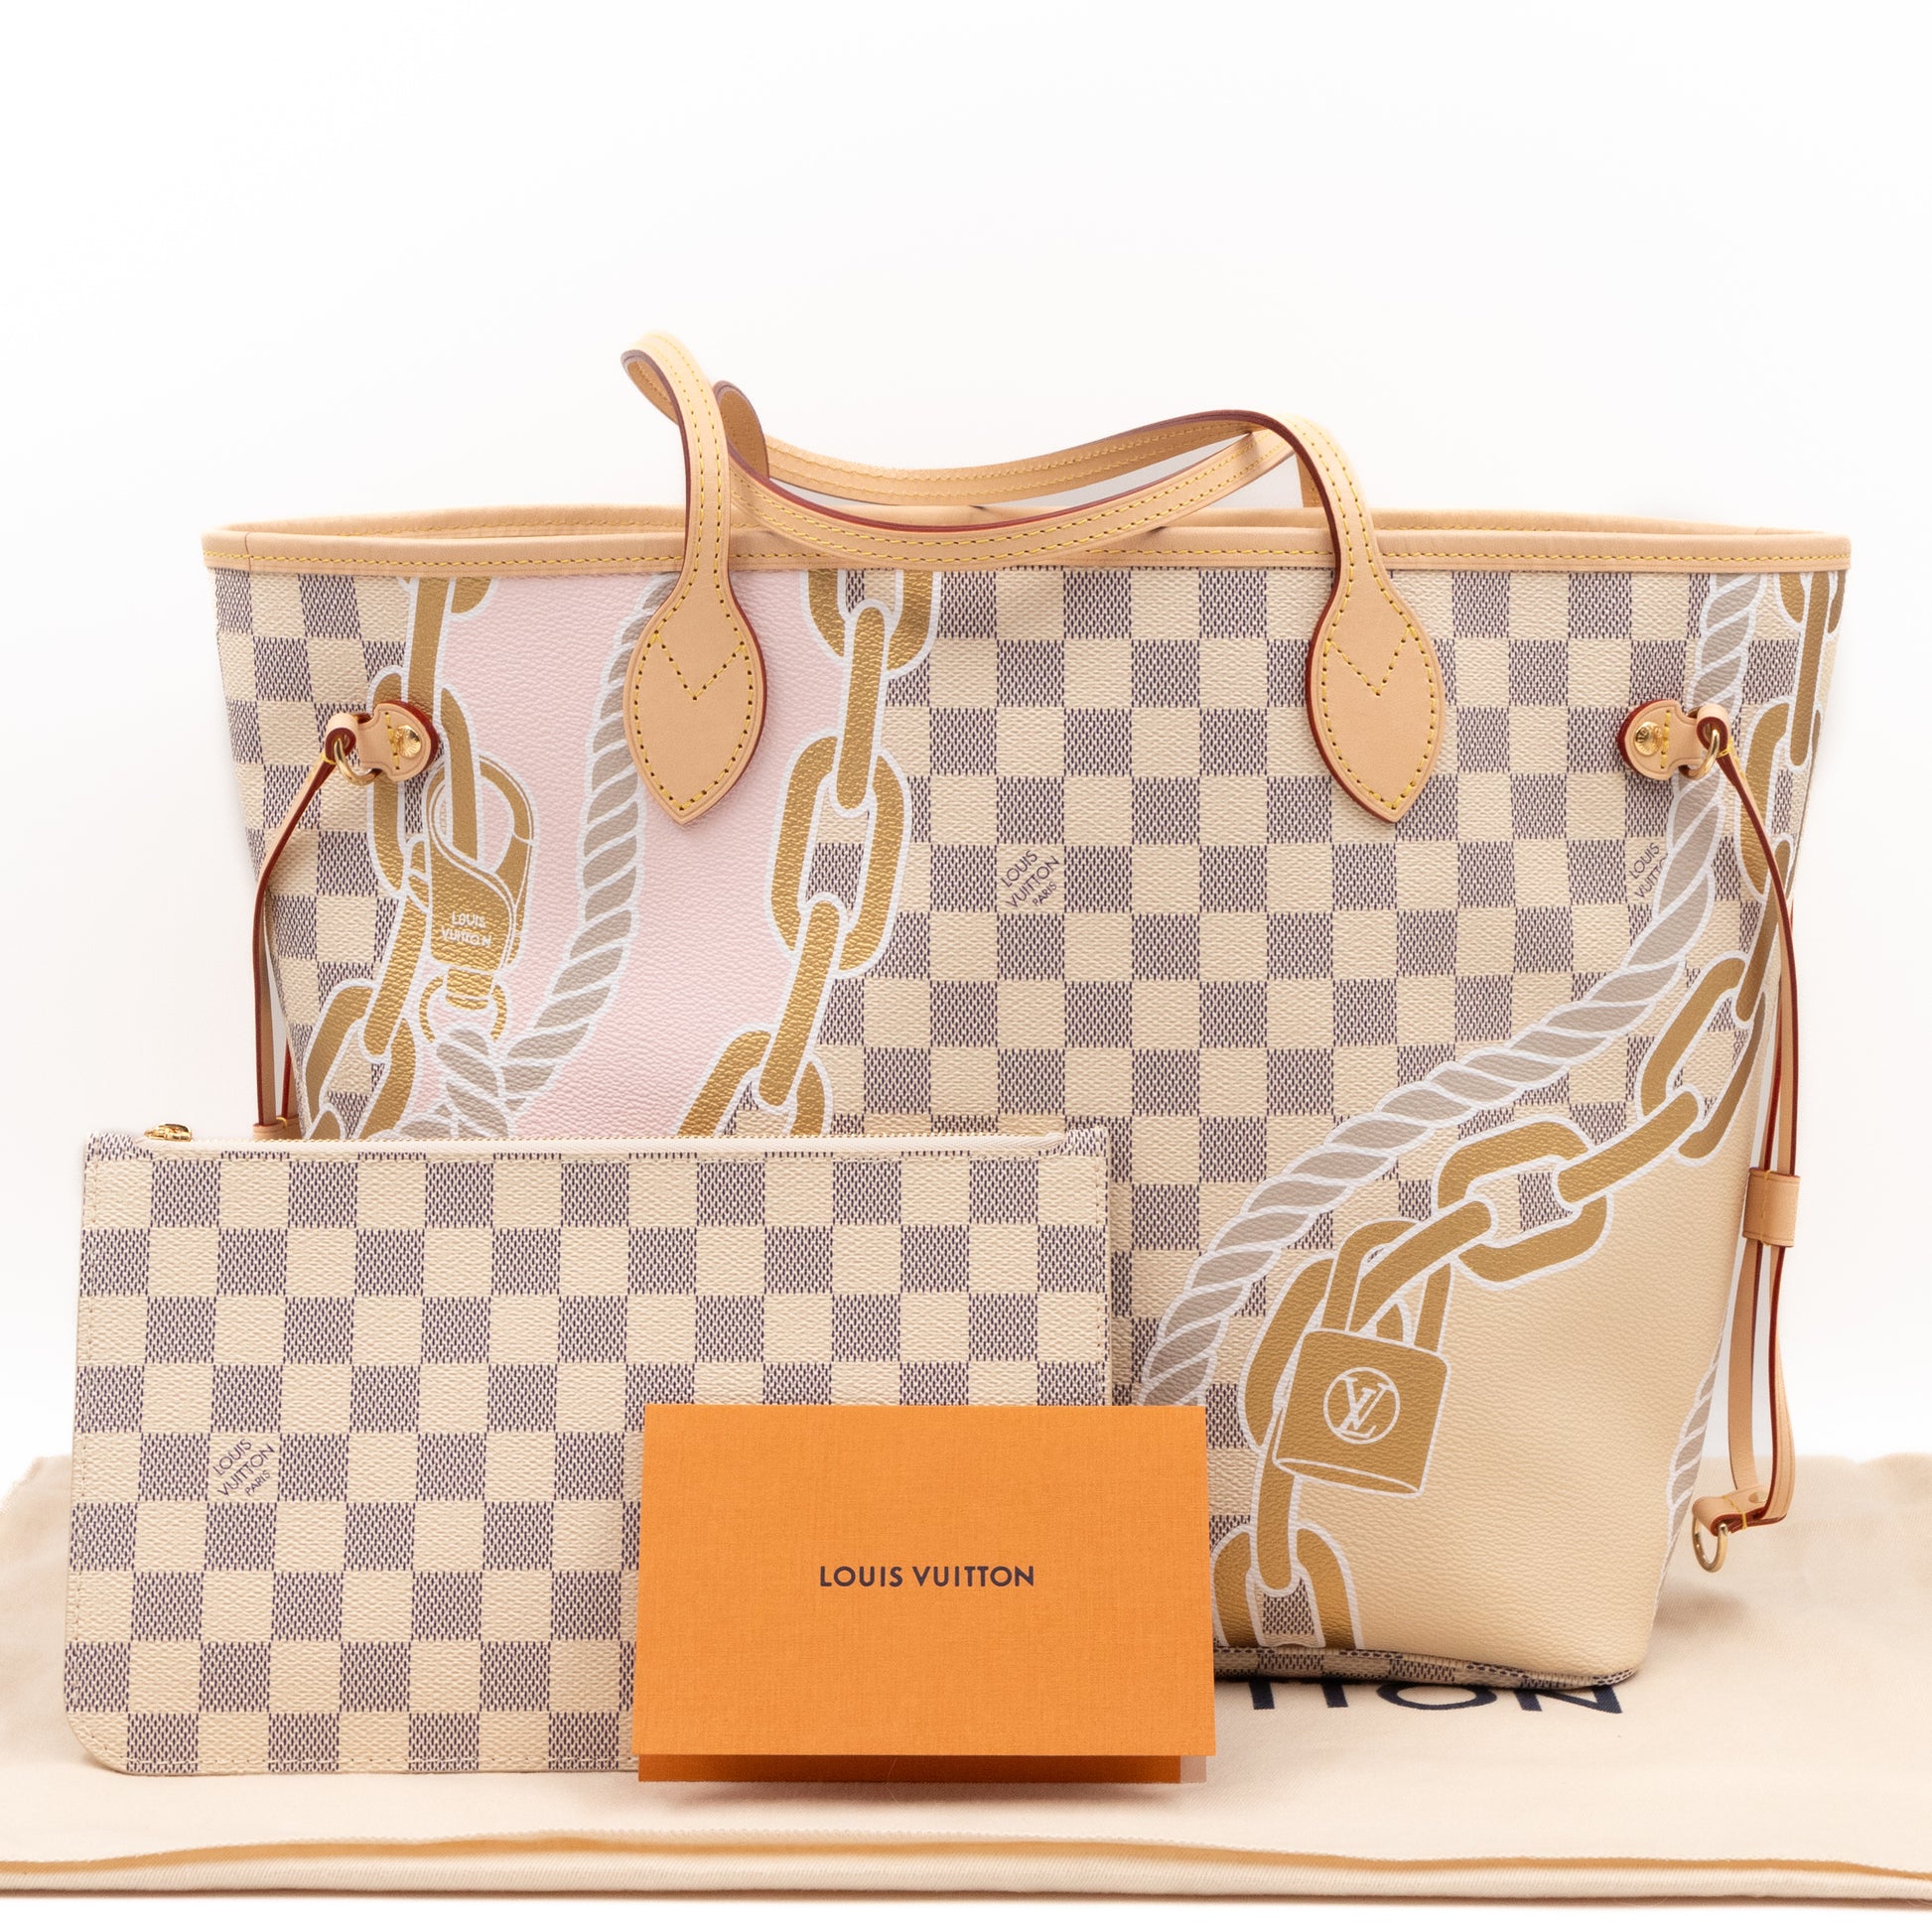 Authentic & Replica Handbag Reviews by The Purse Queen  Louis vuitton handbags  neverfull, Louis vuitton, Louis vuitton bag